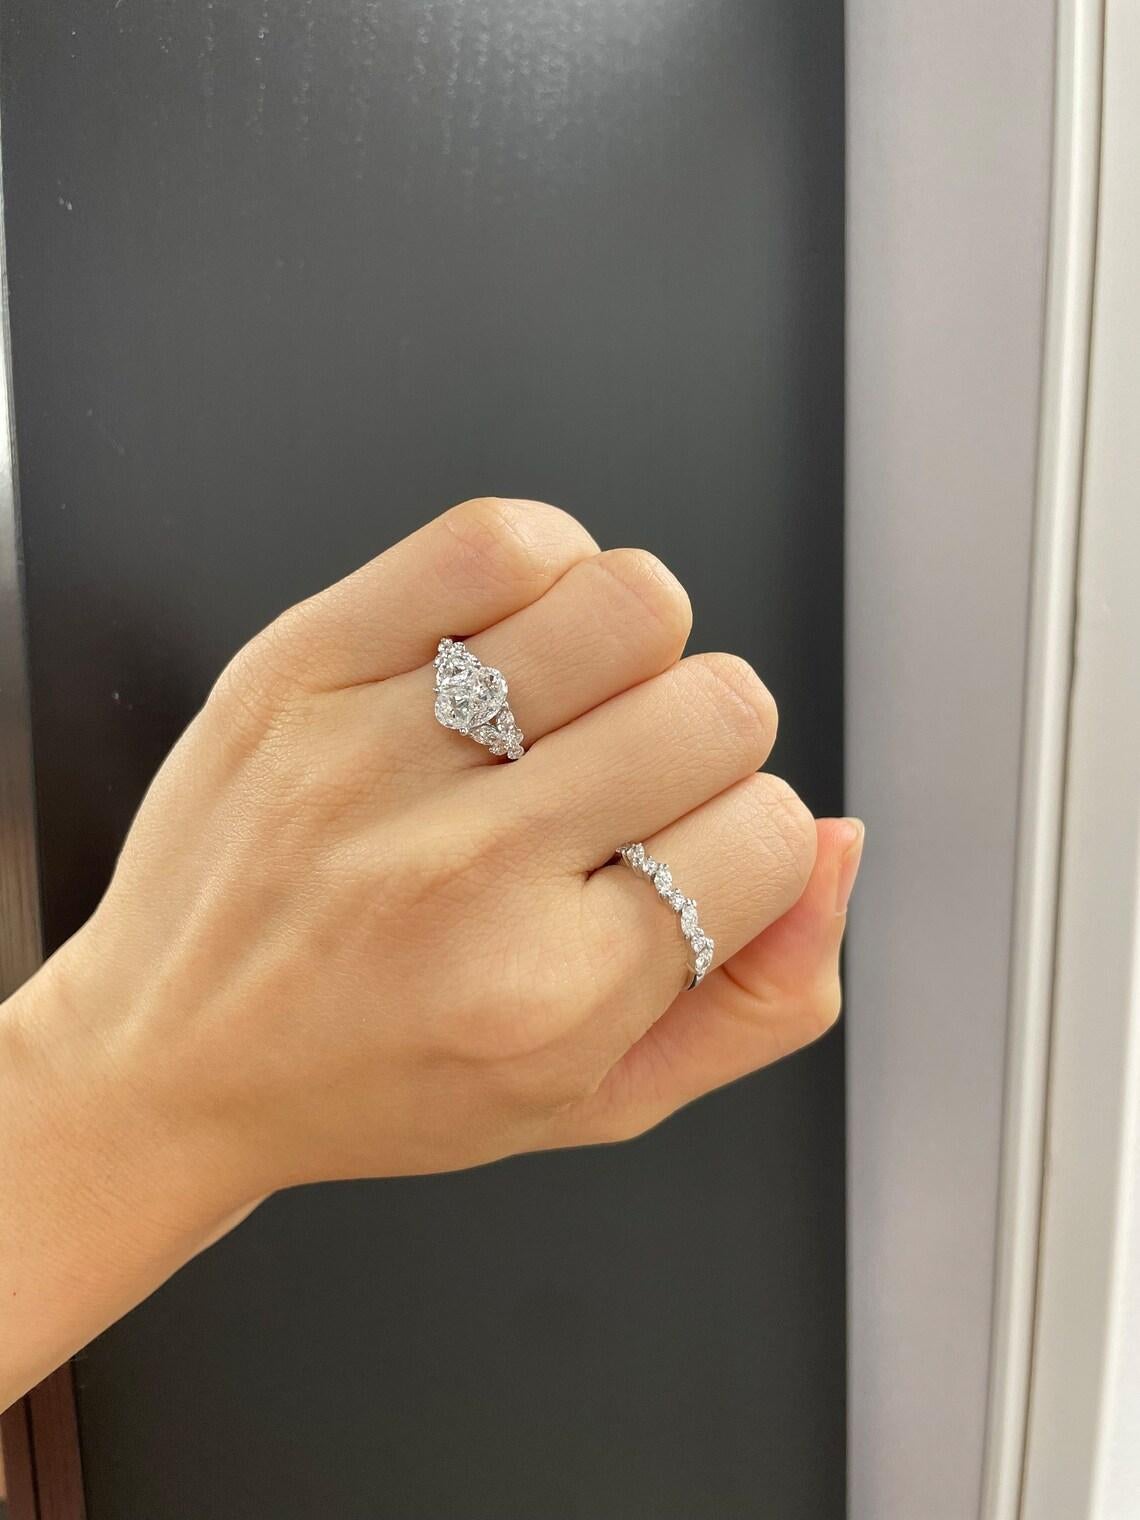 For Sale:  Pie Cut Diamond Ring, Illusion Diamond Ring, Oval Diamond Ring, Unique Engagemen 5